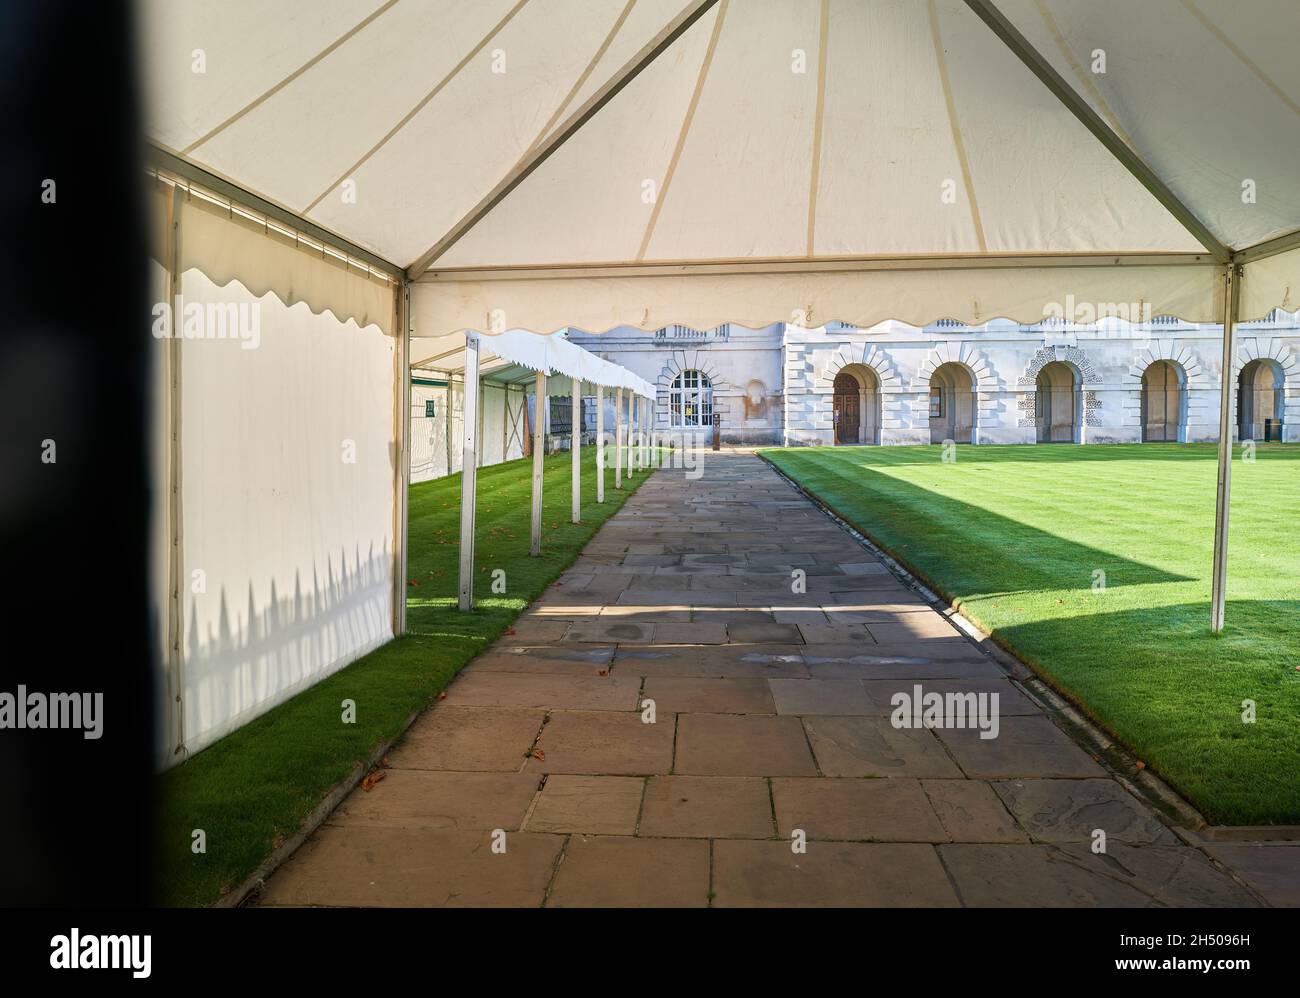 Temporary shelter in the quadrangle at Senate House, university of Cambridge, England, to shelter visitors at graduation ceremonies. Stock Photo